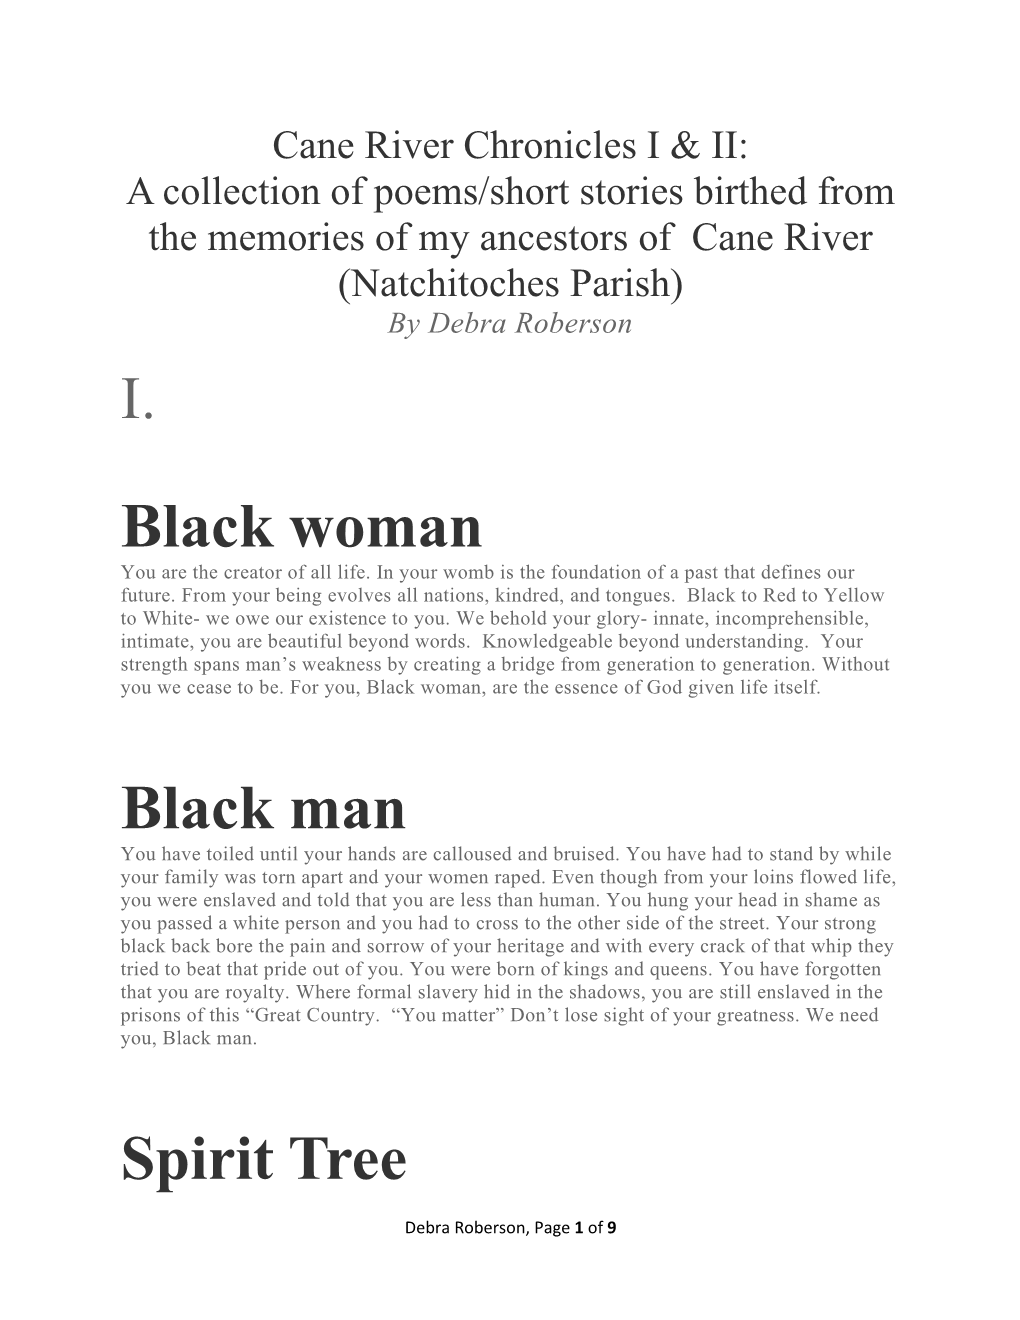 Black Woman Black Man Spirit Tree